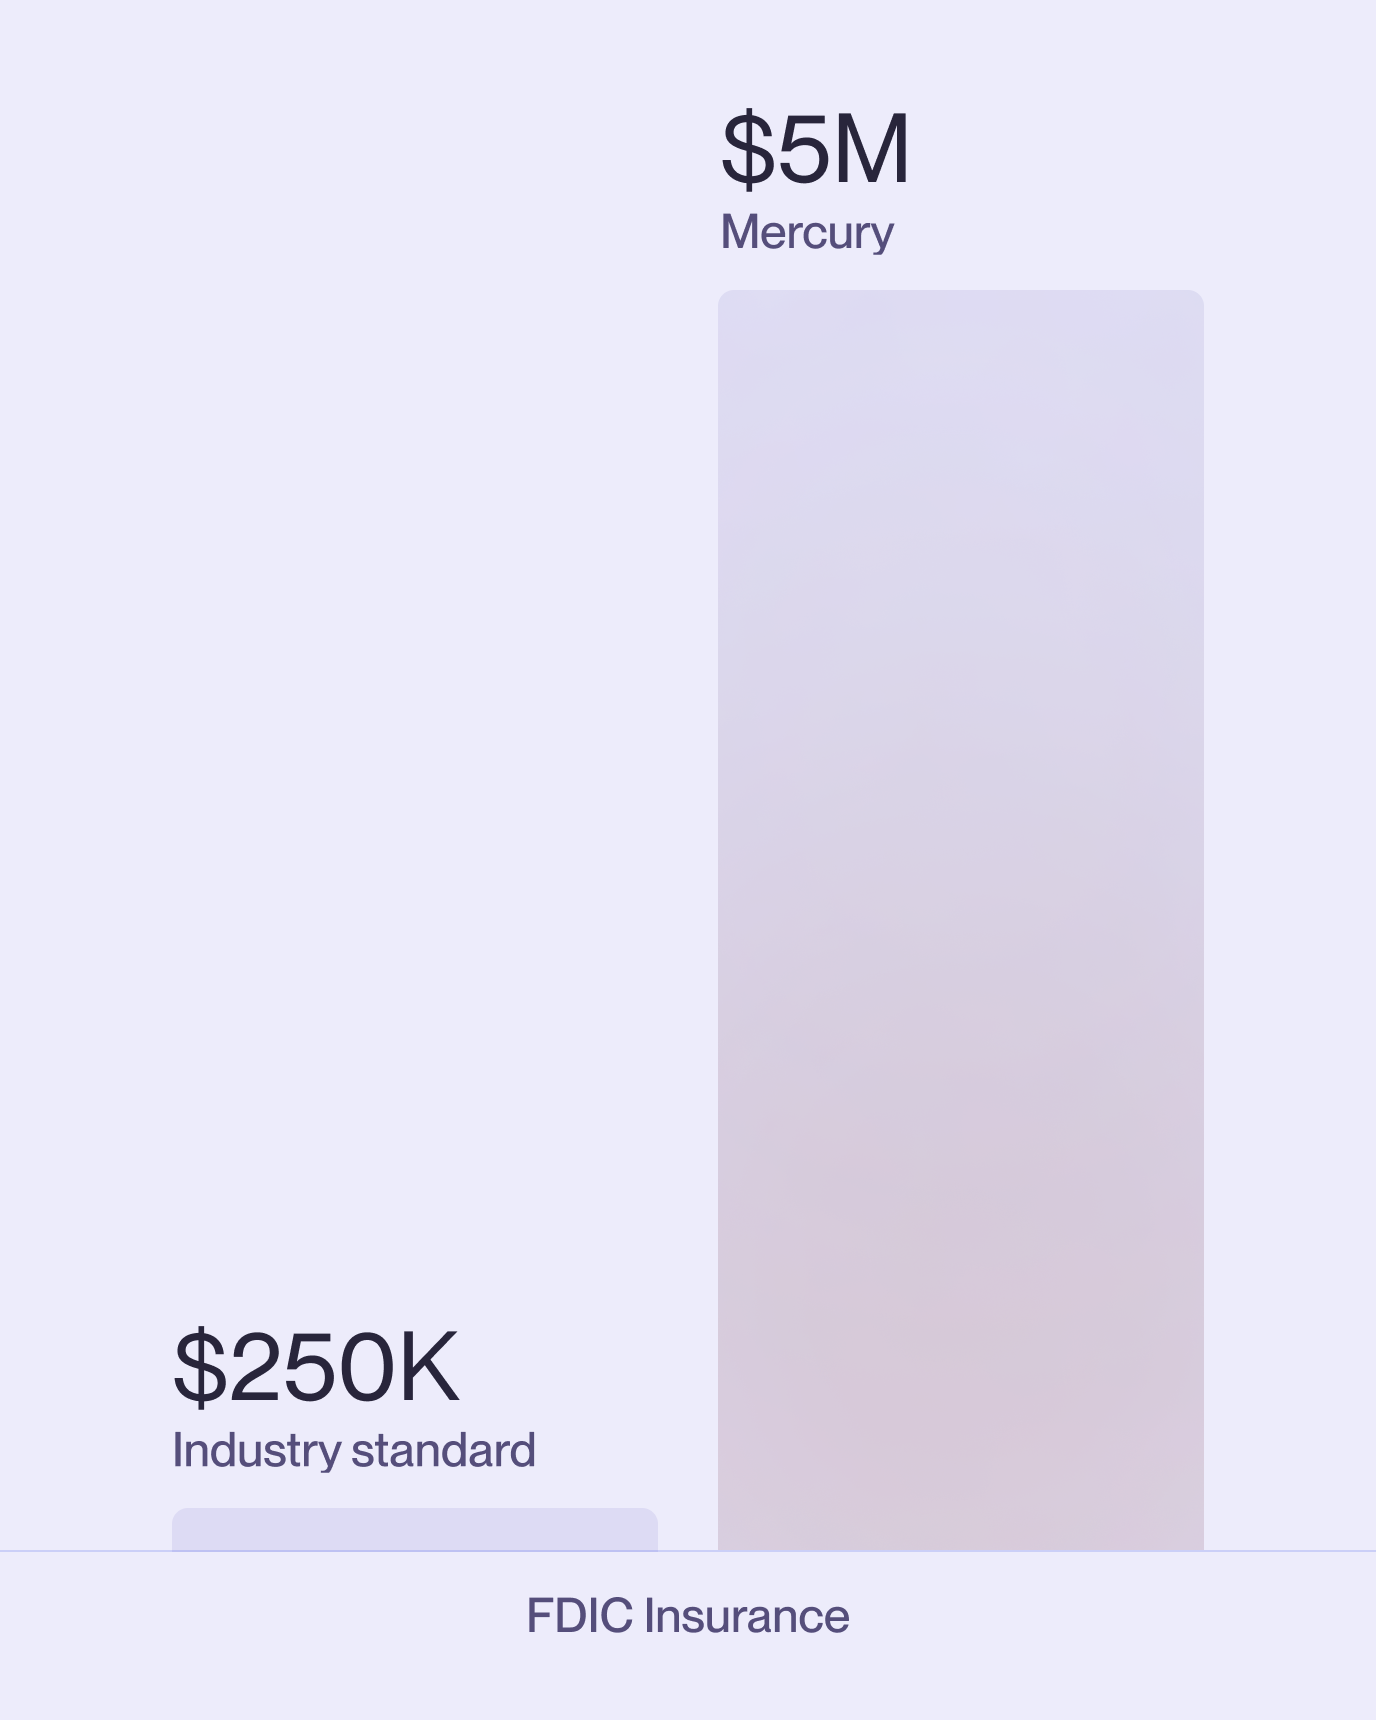 Column chart comparing $5M FDIC insurance available through Mercury versus the industry standard $250K